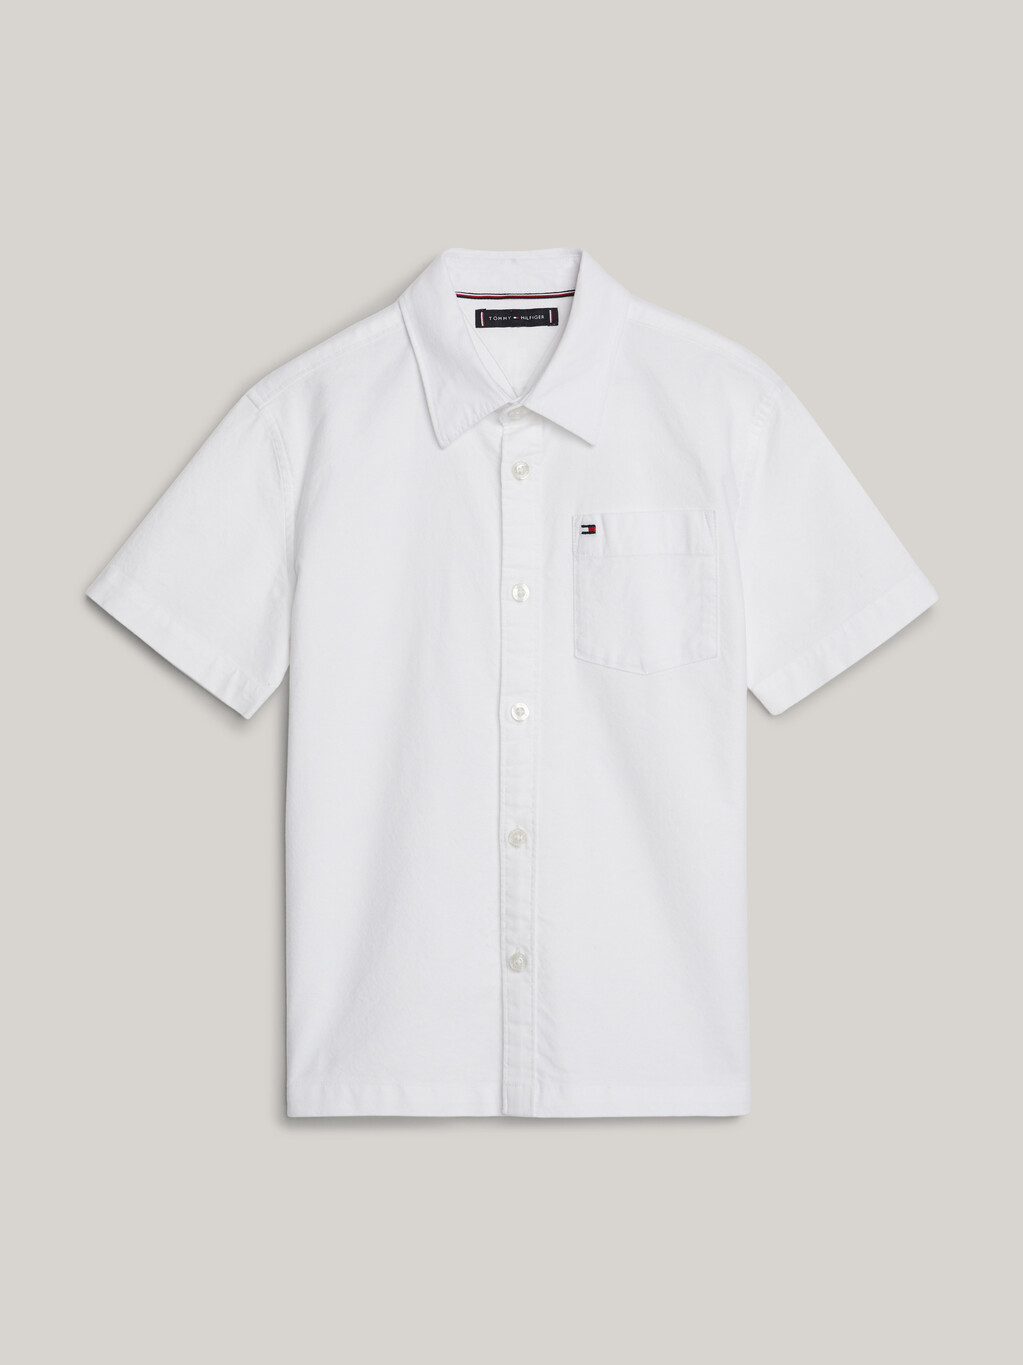 Essential Short Sleeve Oxford Shirt, White, hi-res